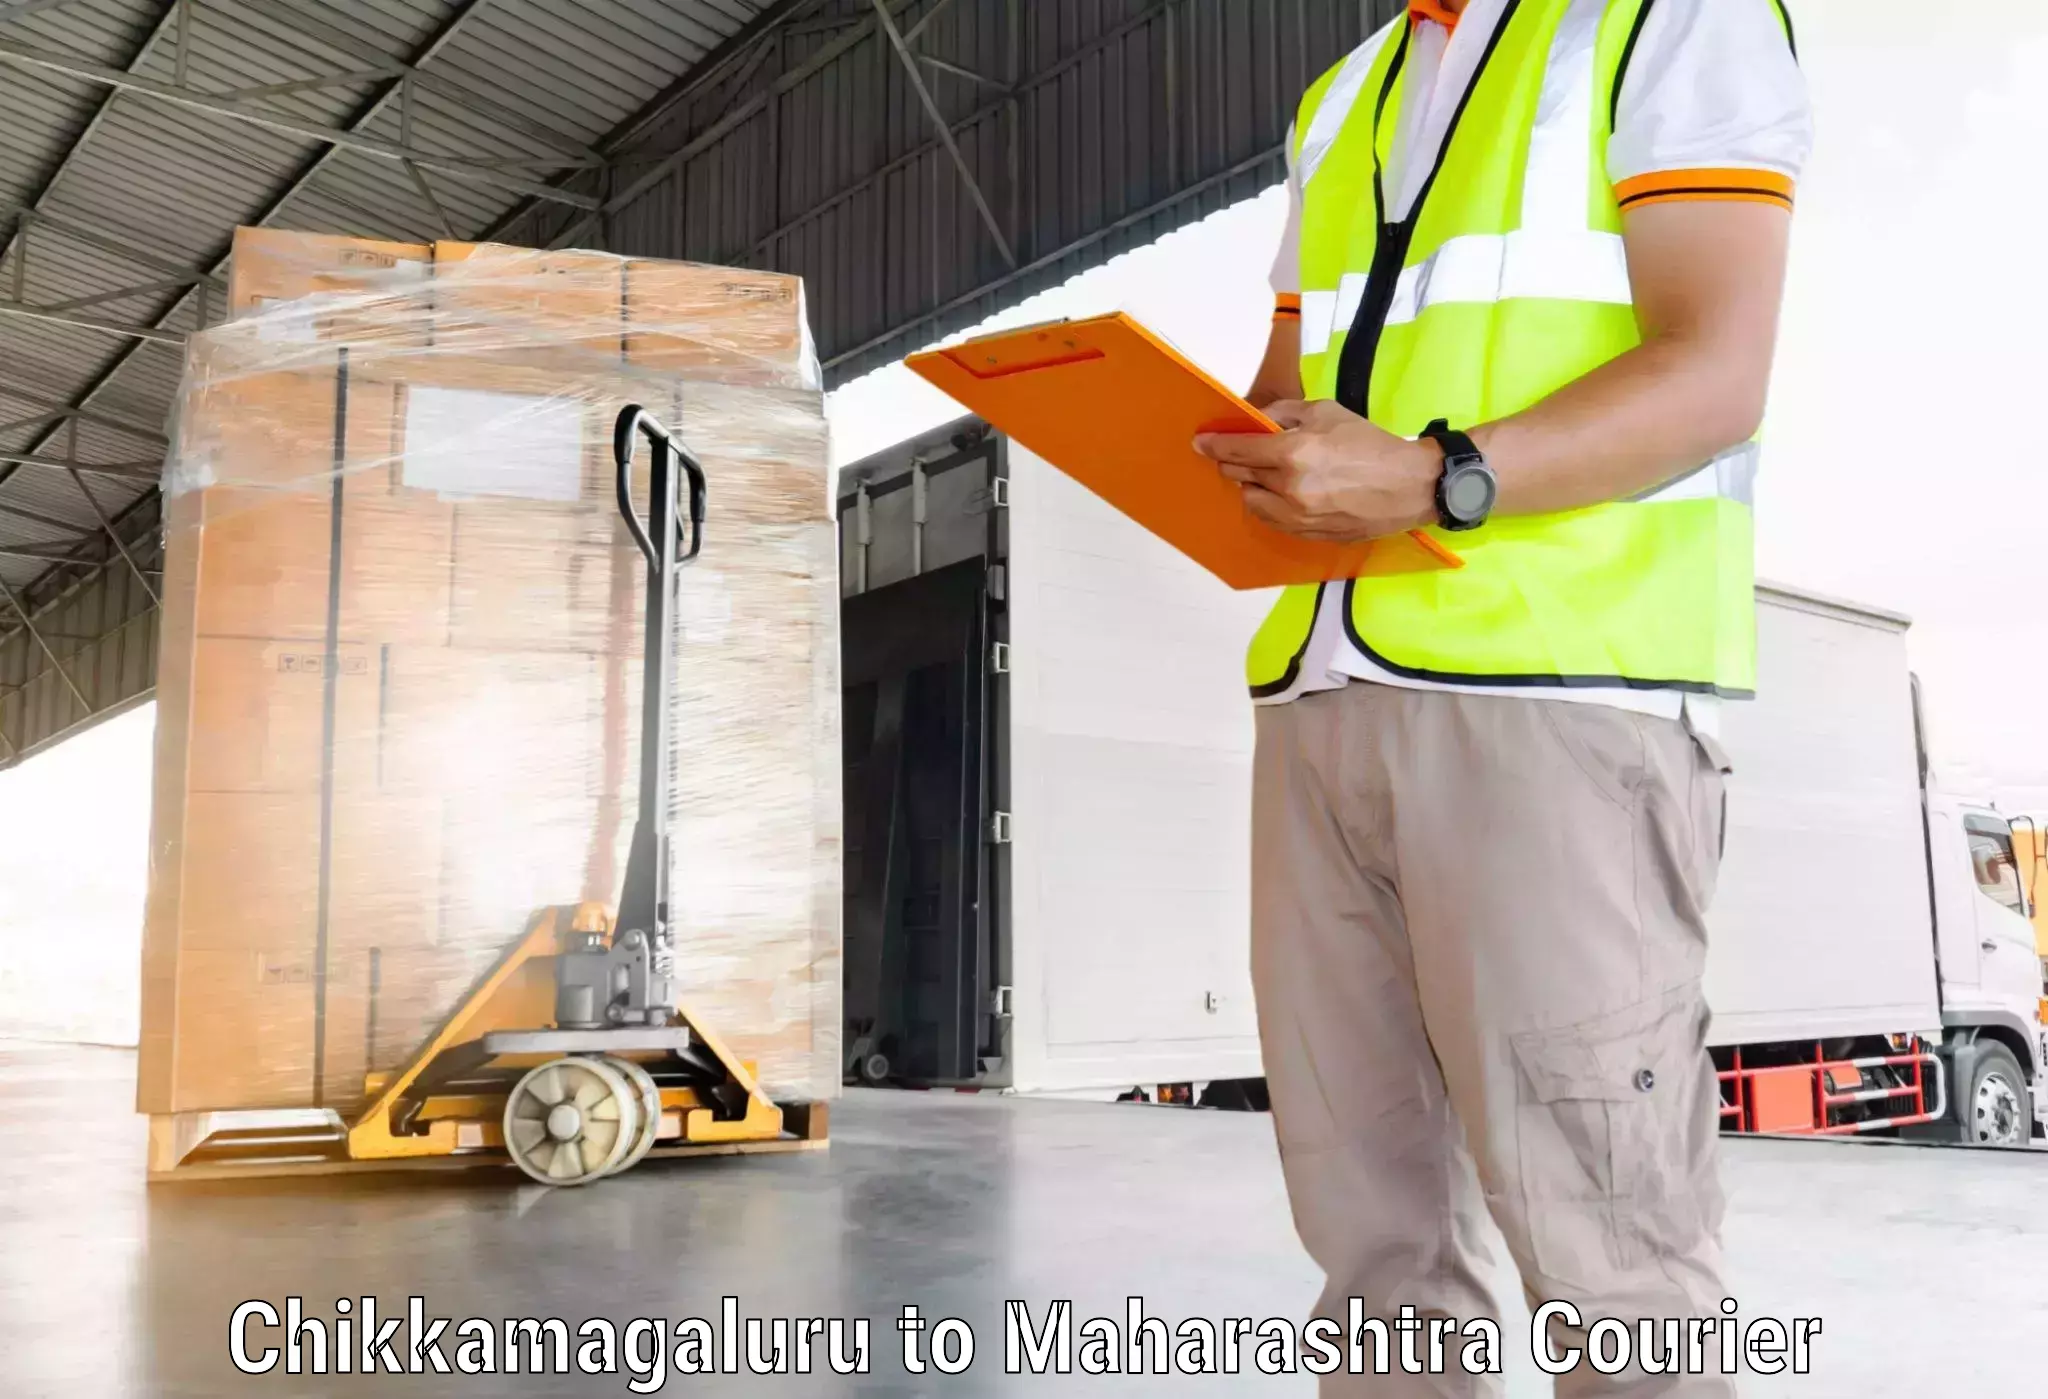 Delivery service partnership Chikkamagaluru to Nanded